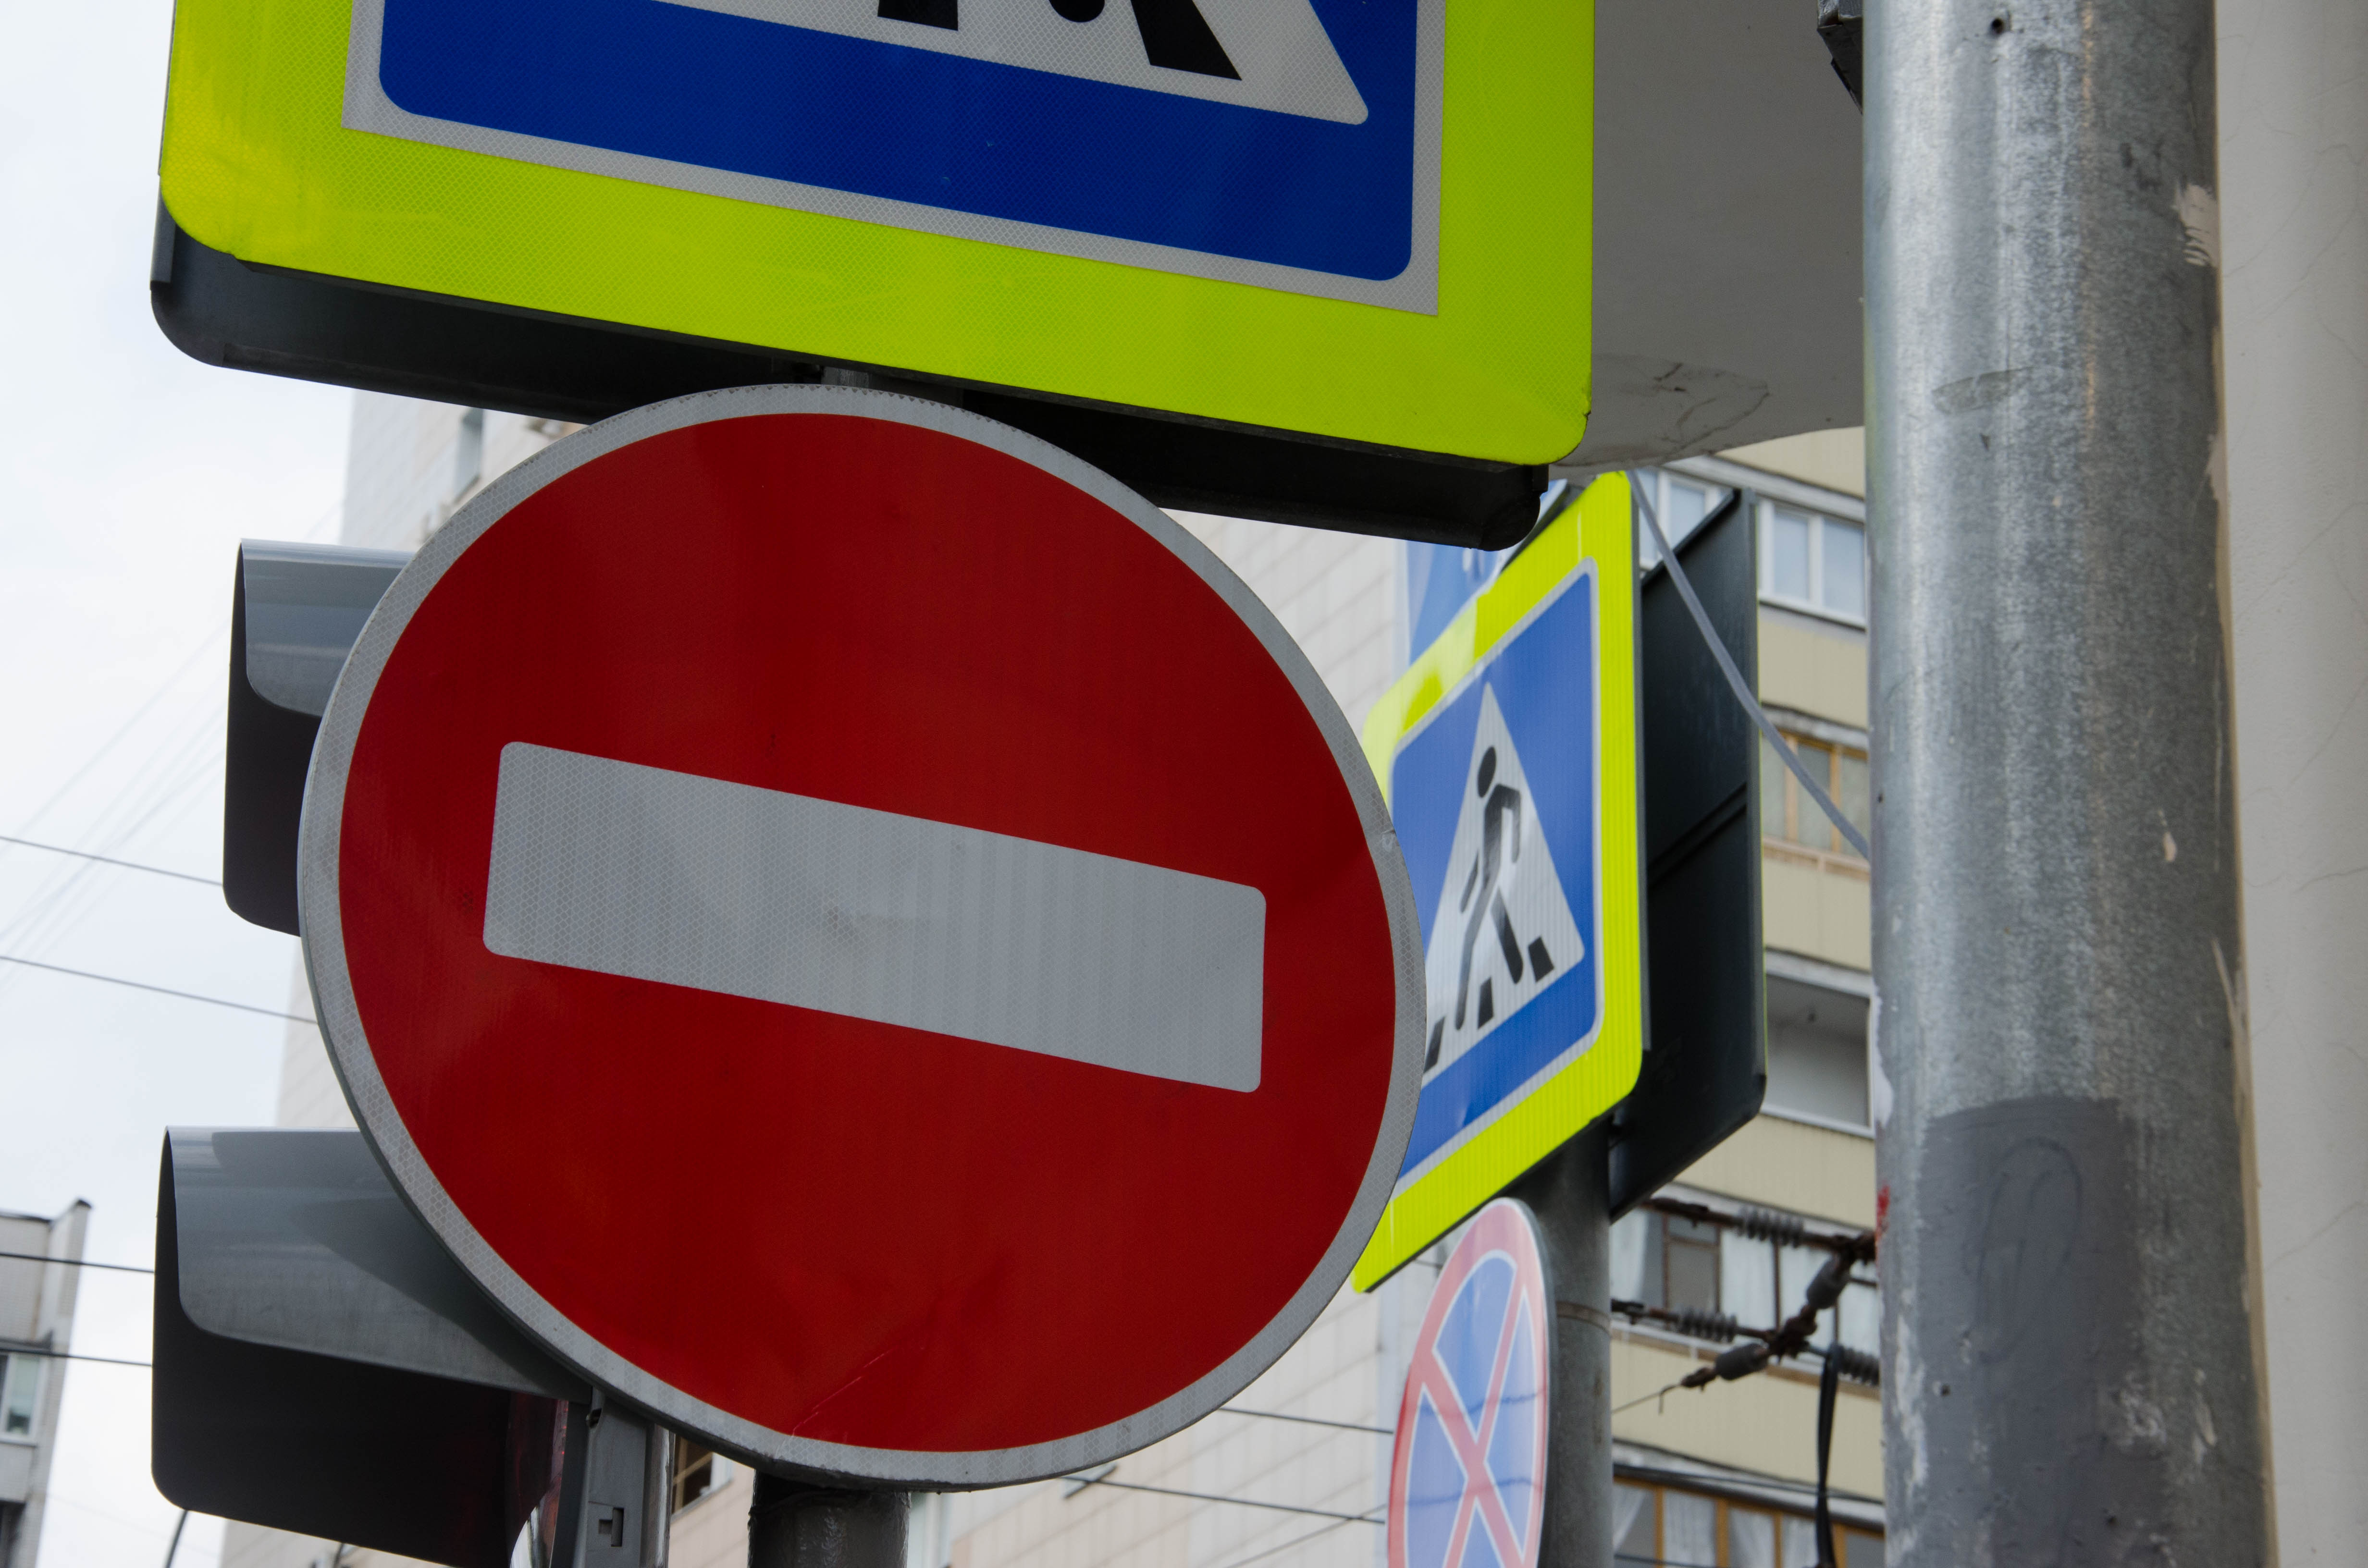 Ограничения проезда связаны с проведением киносъемок на участке. Фото: Анастасия Кирсанова, «Вечерняя Москва»